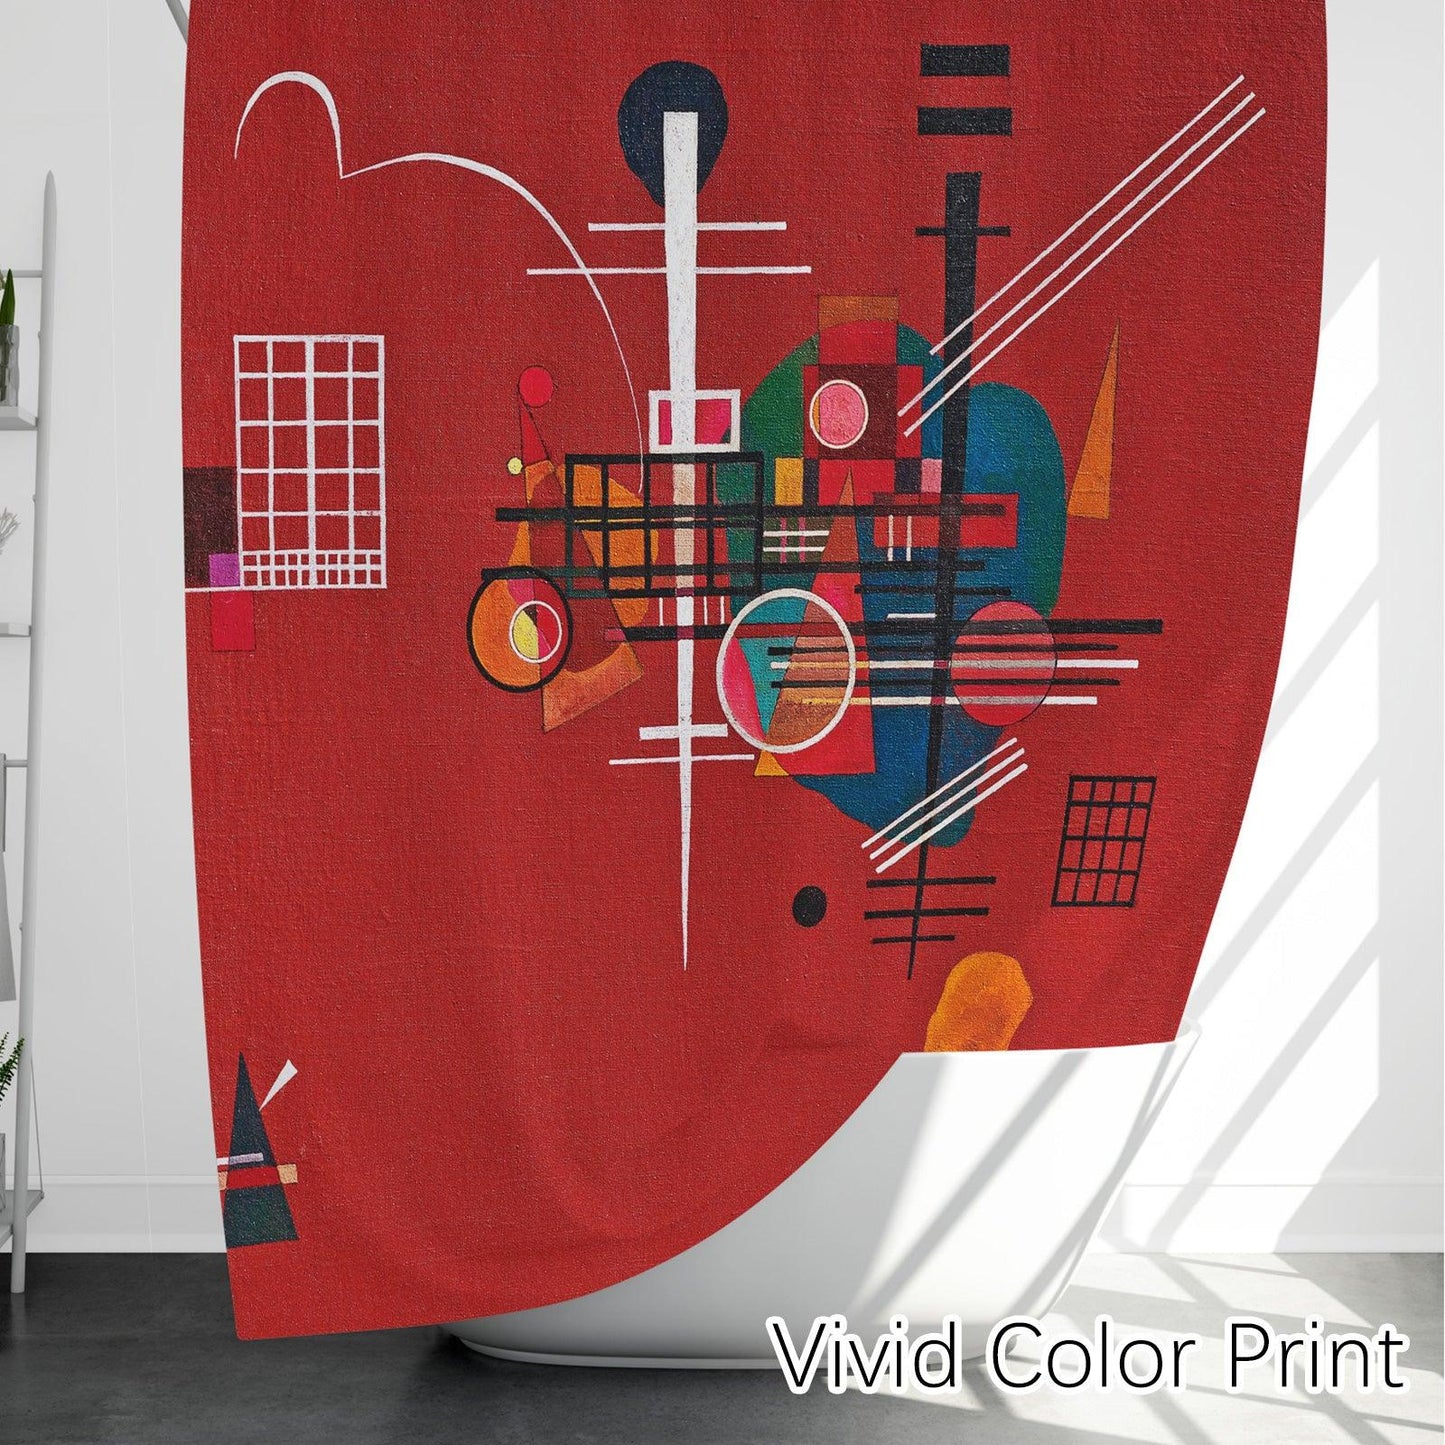 Abstract Art Shower Curtain Set (Dull Red by Wassily Kandinsky) - Berkin Arts